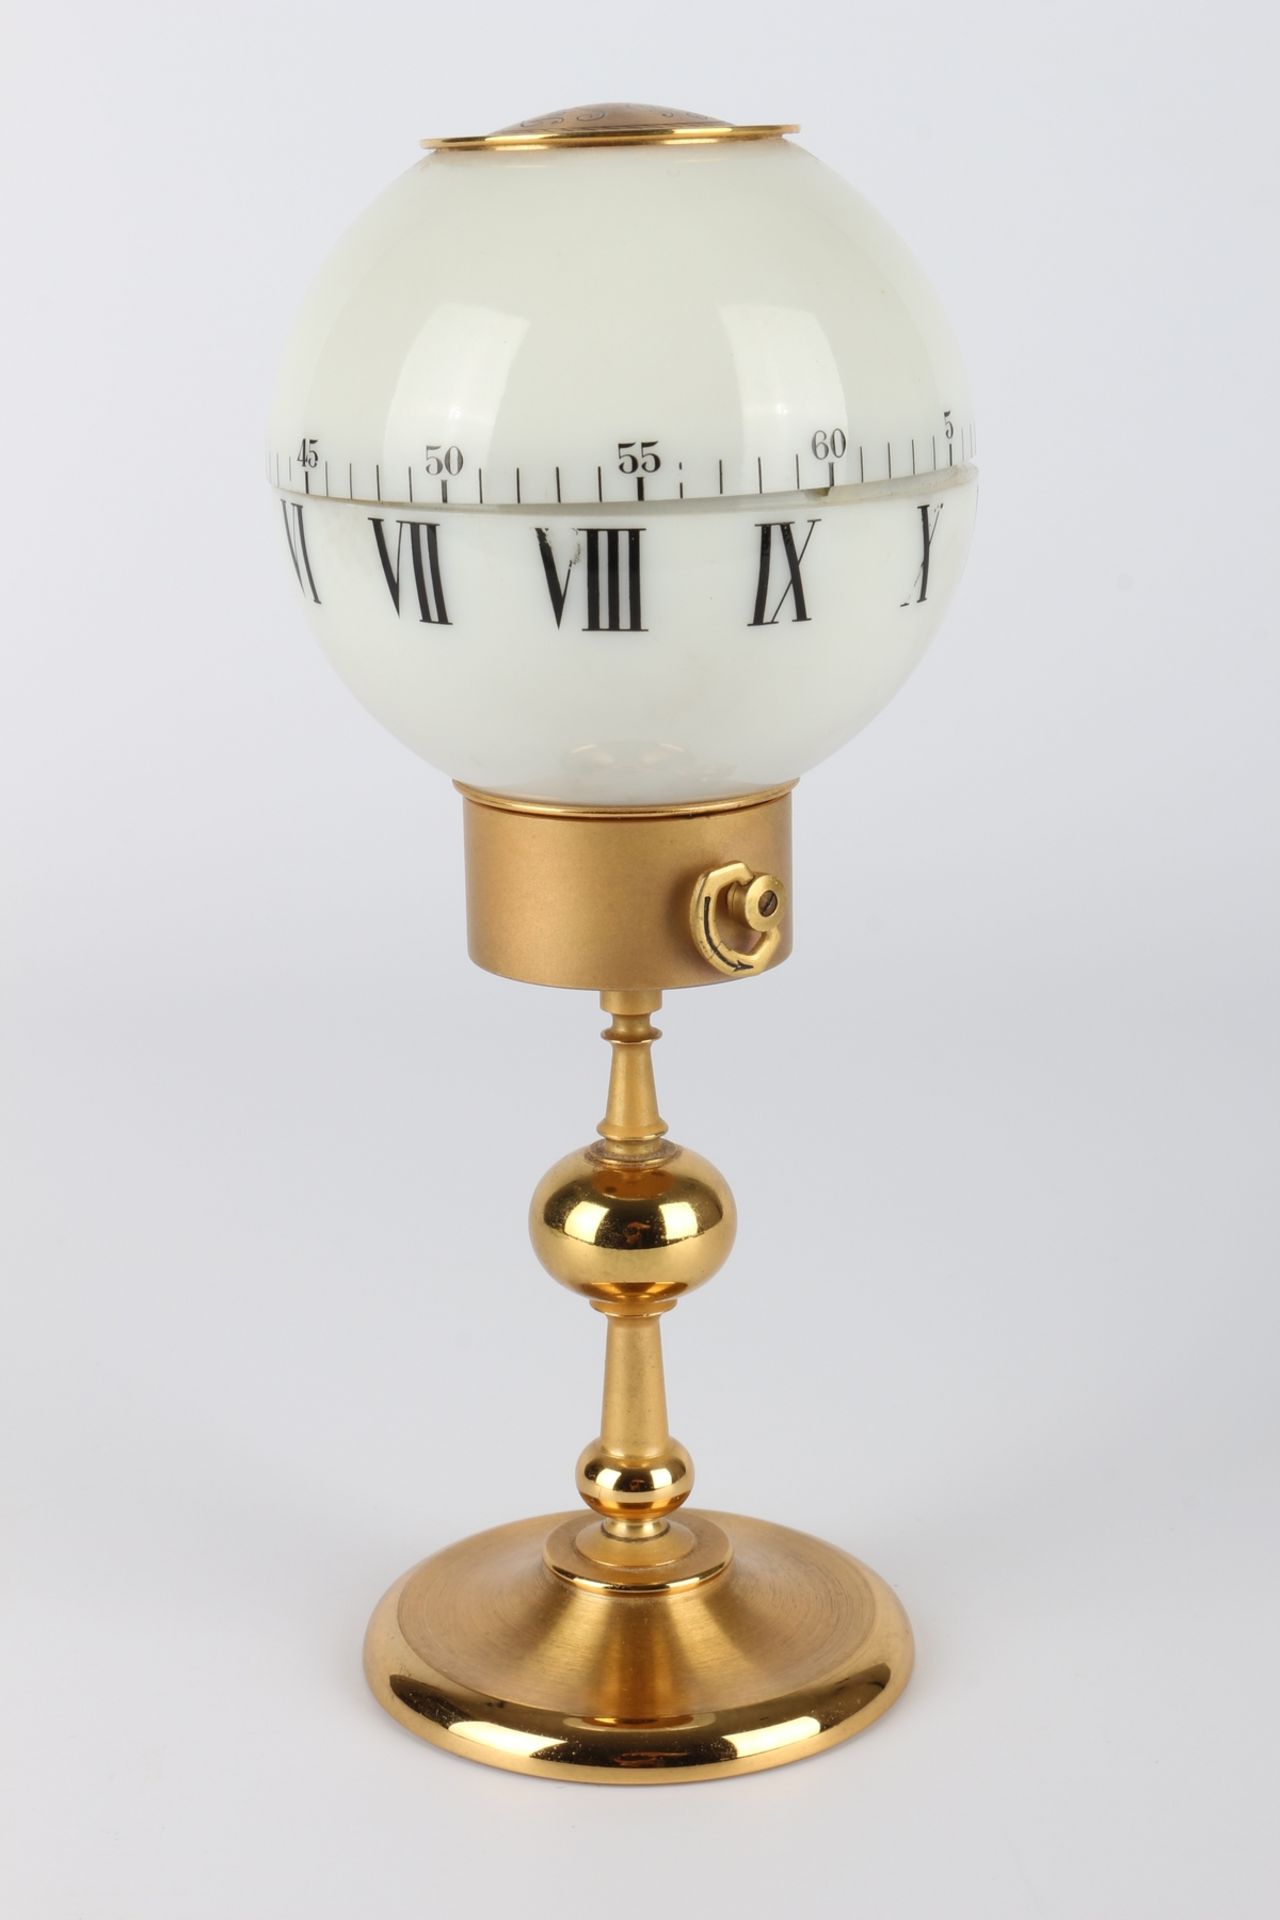 Imhof Tempus Fugit Kugel-Tischuhr, table clock, - Image 2 of 5